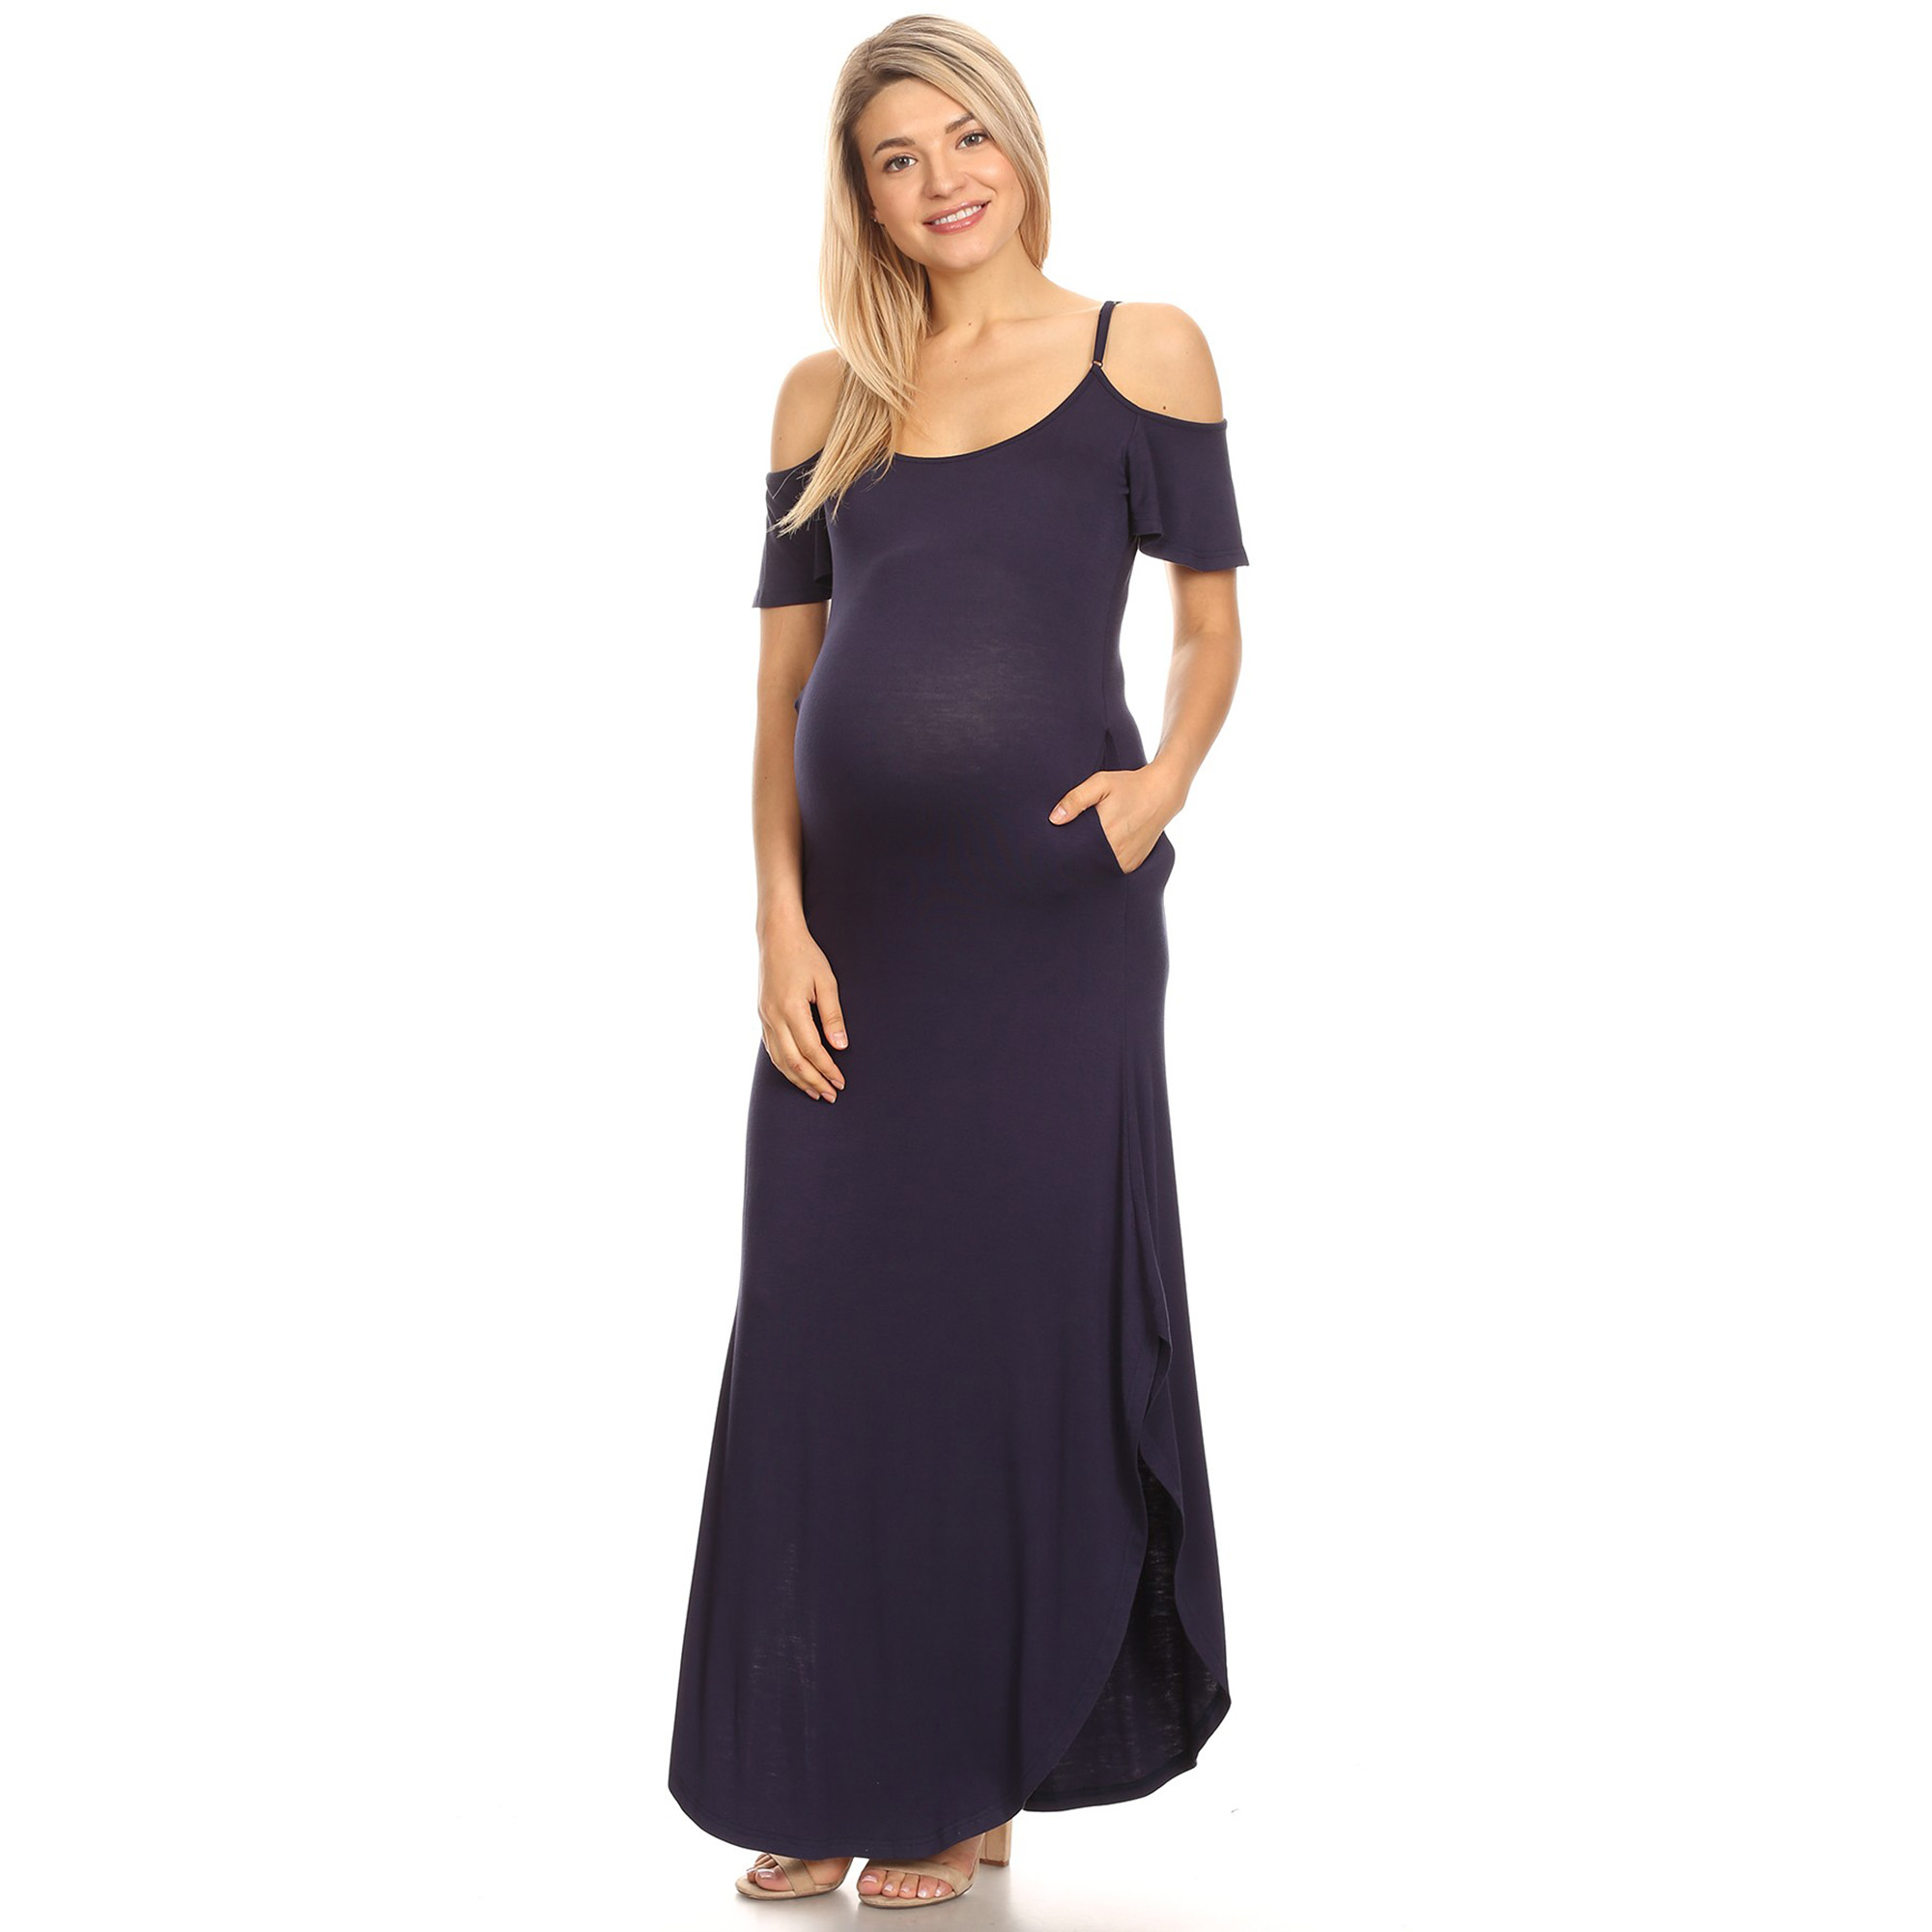 White Mark Women's Maternity Cold Shoulder Maxi Dress - Navy, 3X